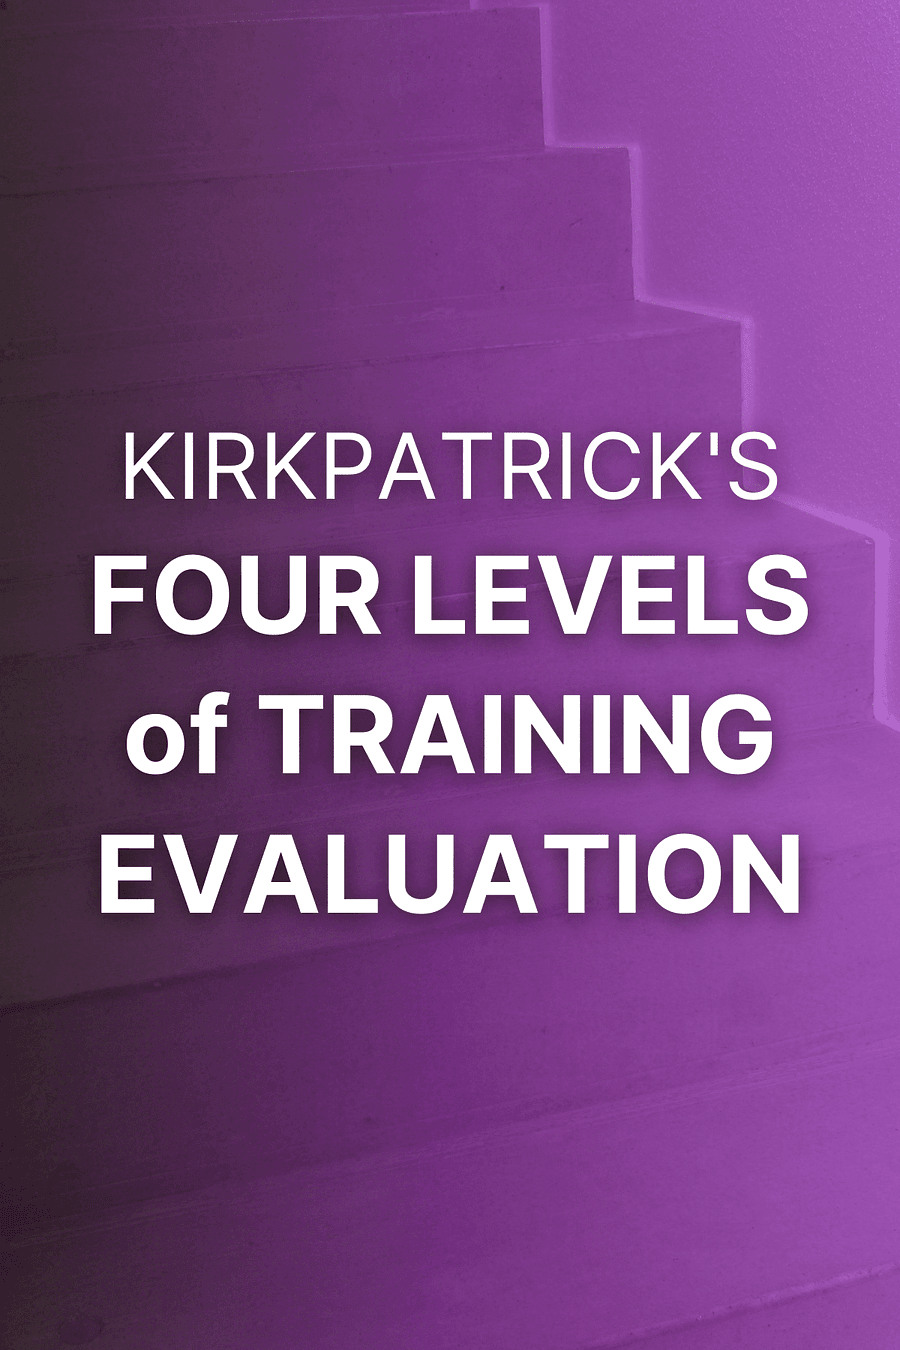 Kirkpatrick's Four Levels of Training Evaluation by James D. Kirkpatrick, Wendy Kayser Kirkpatrick - Book Summary